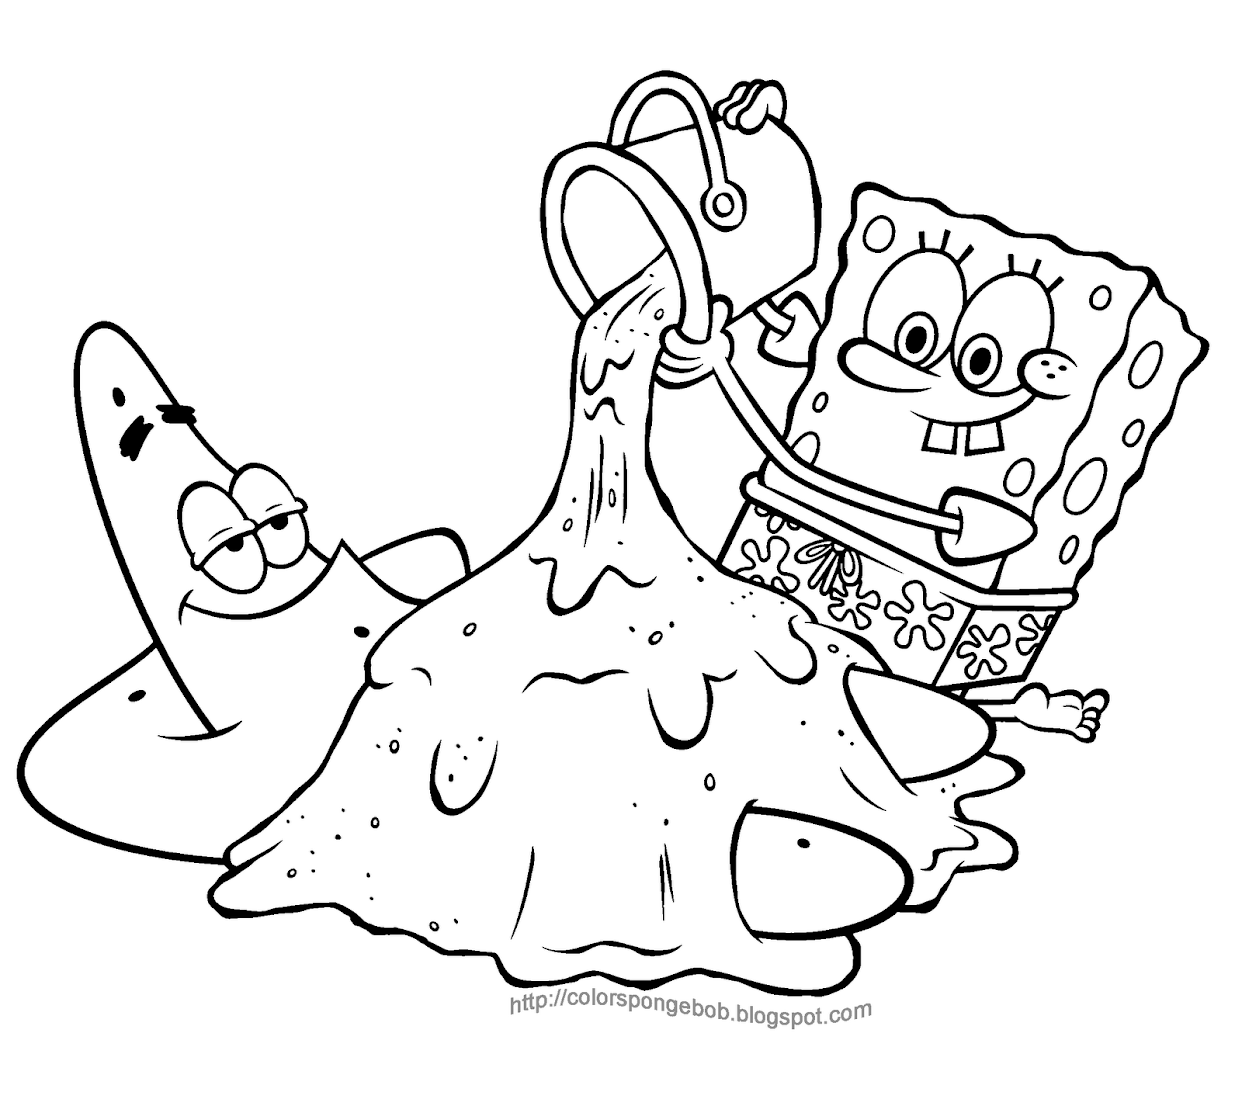 gangsta spongebob coloring pages - photo #17